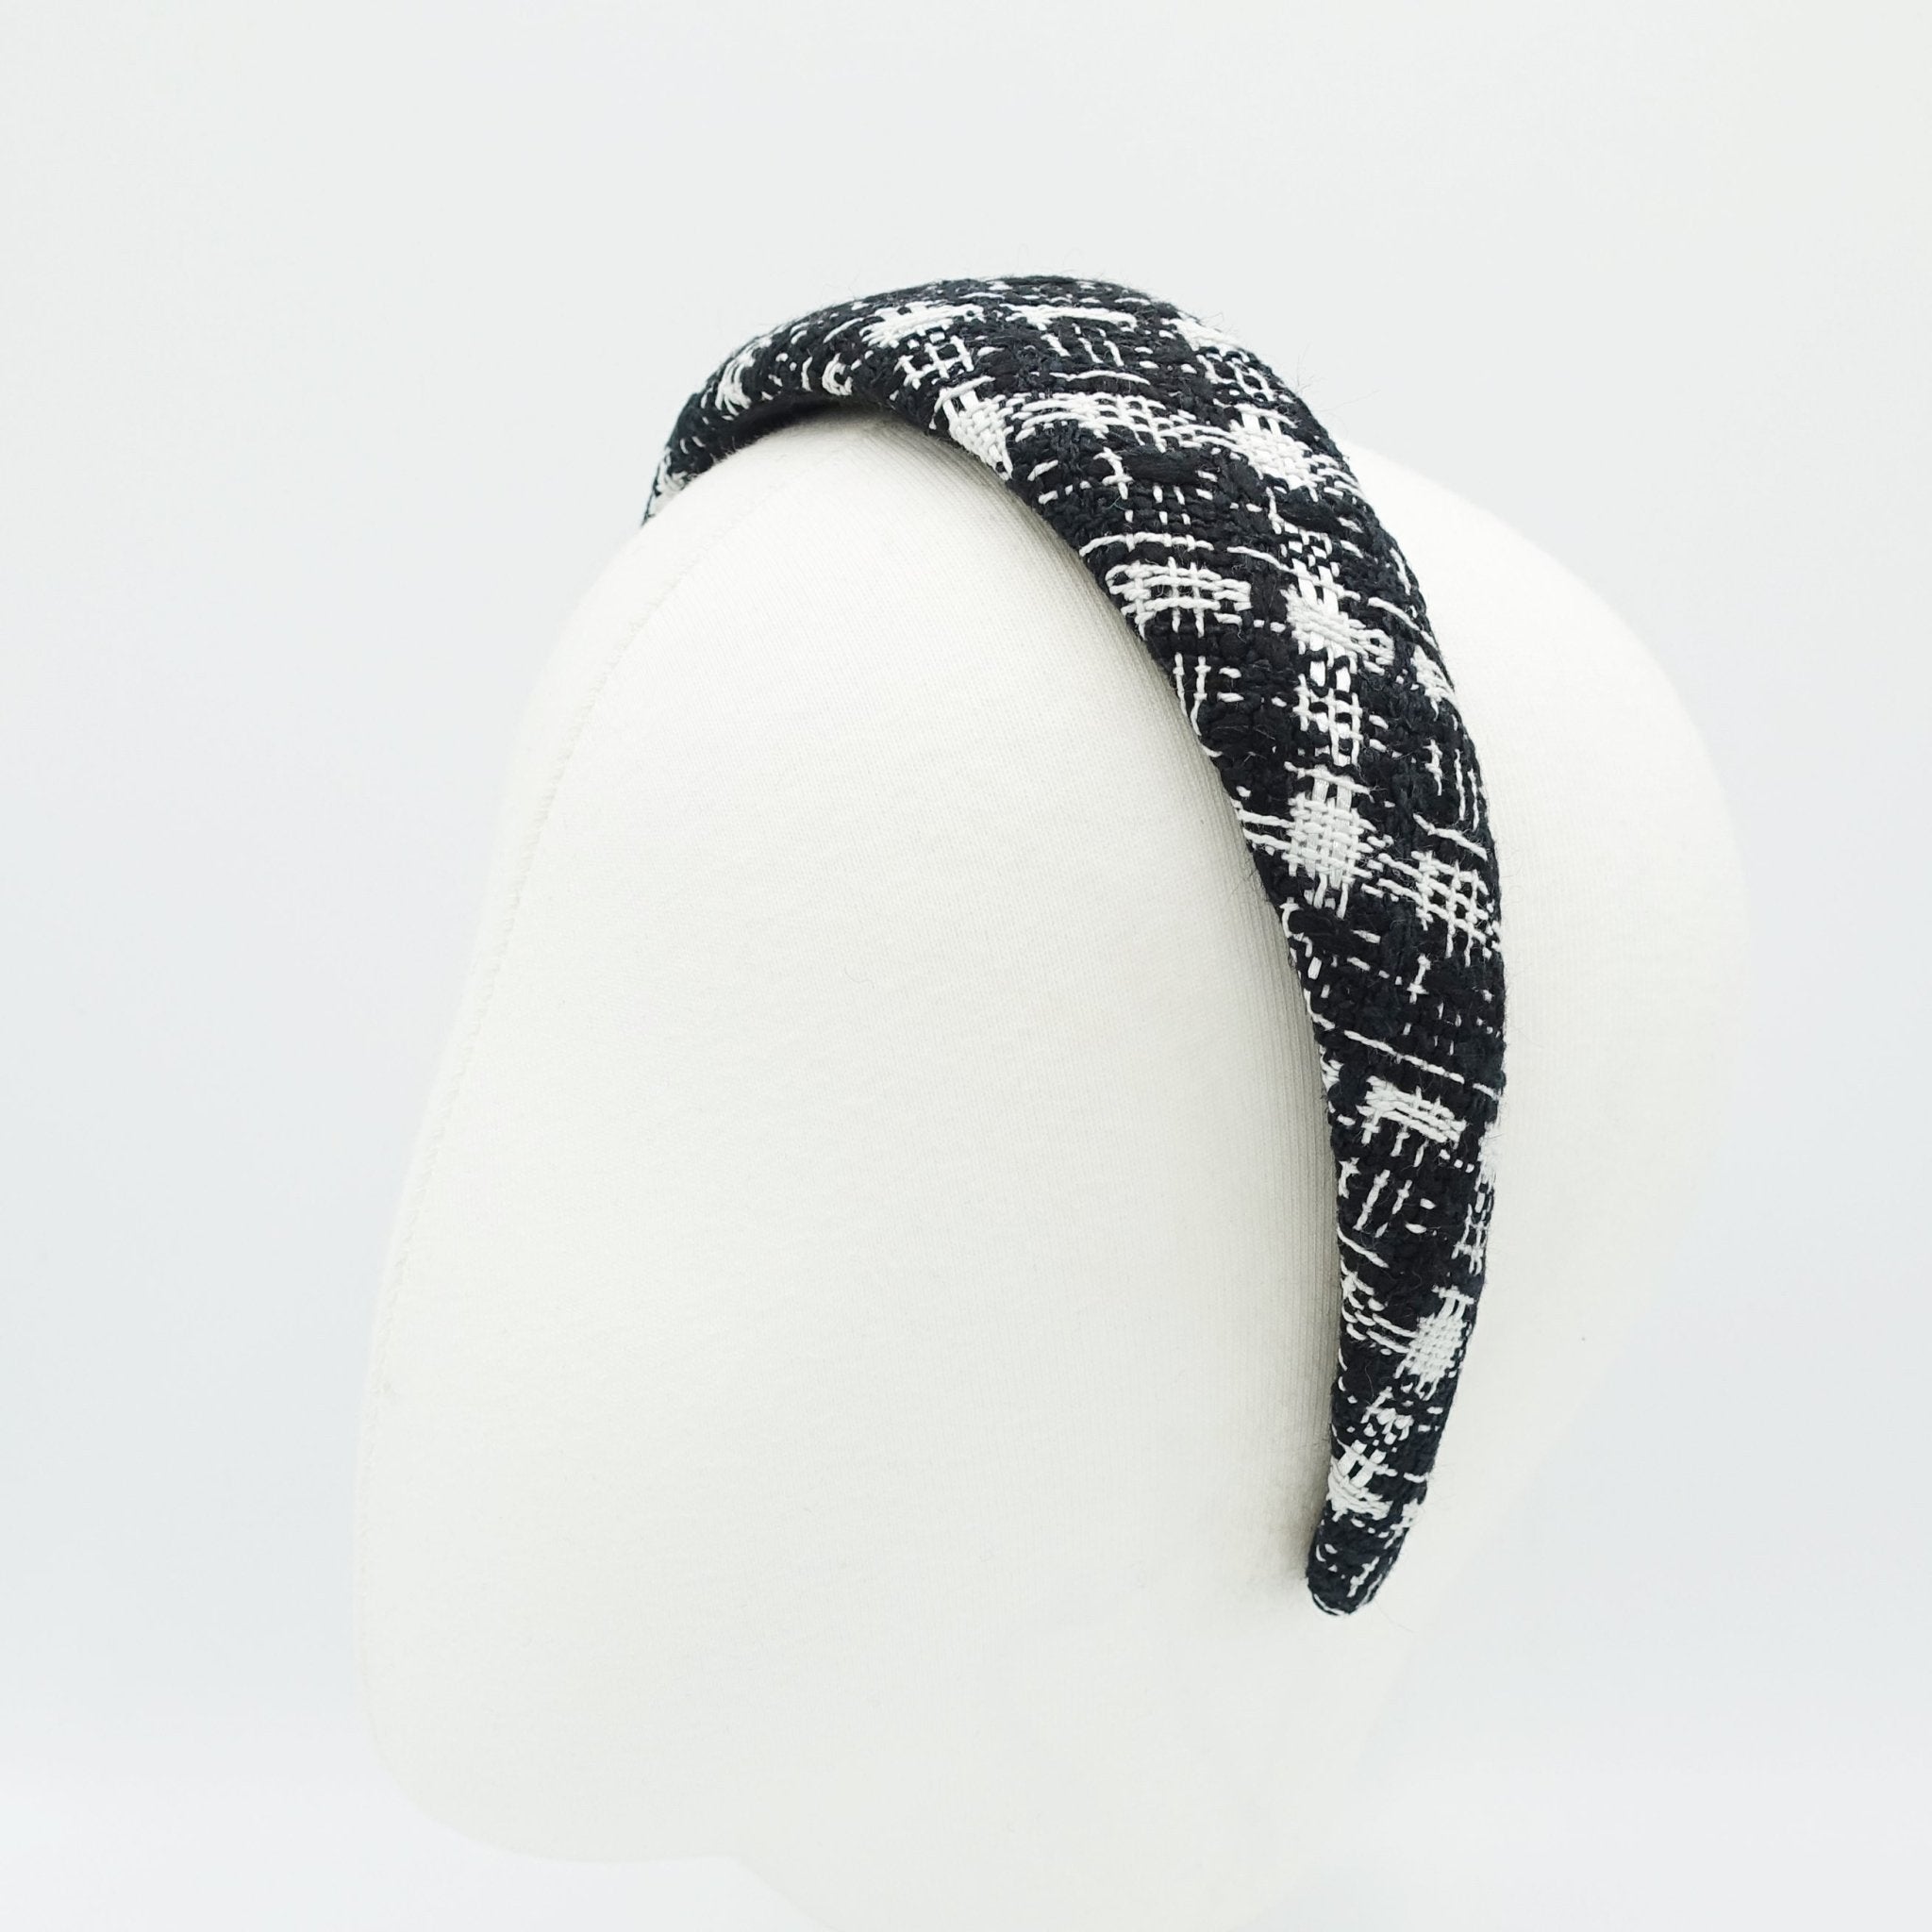 VeryShine tweed plaid check headband padded hairband Fall Winter simple casual hair accessory for women